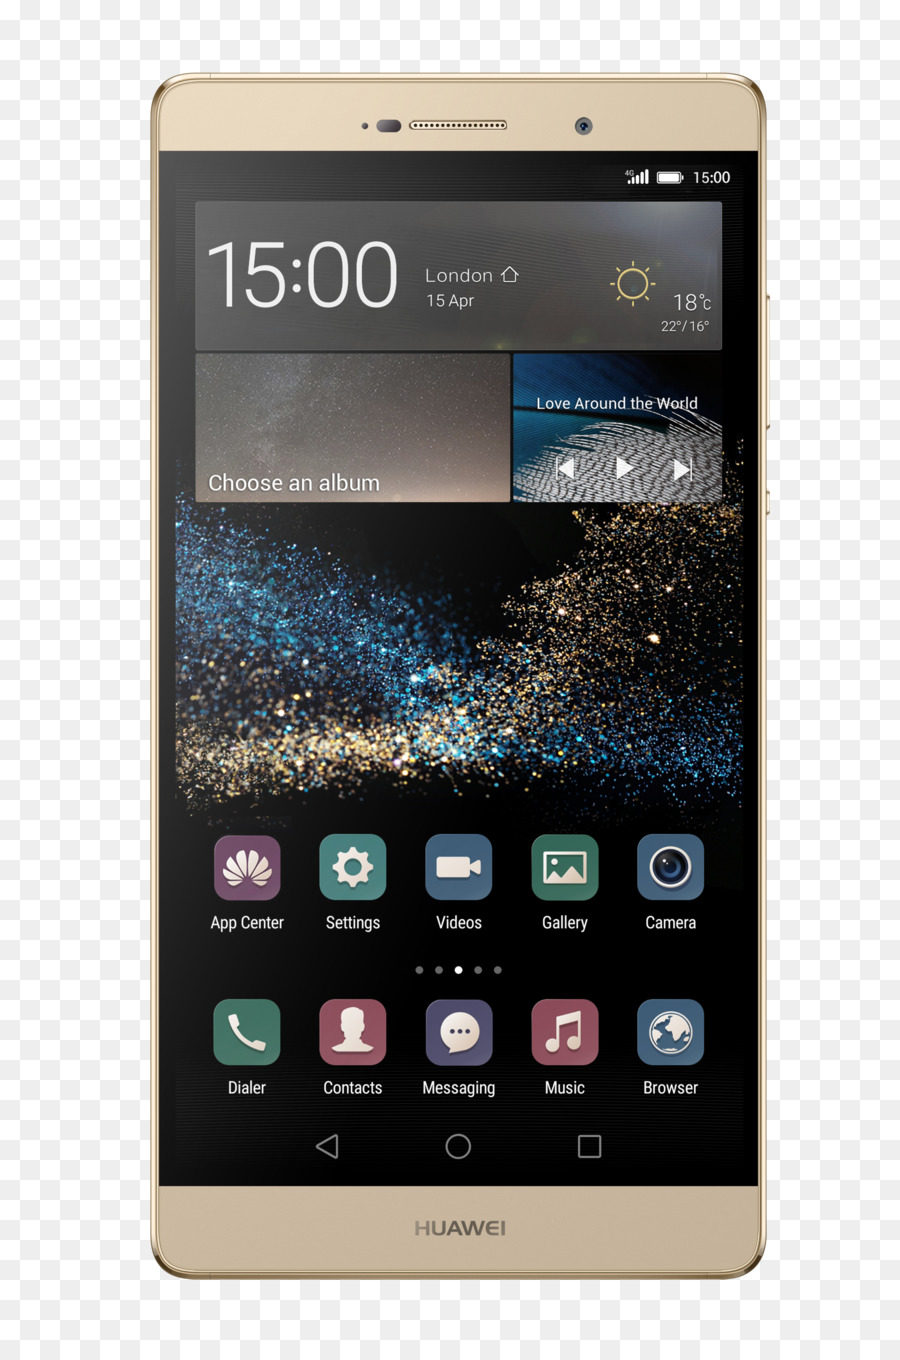 Huawei P8max Smartphone Huawei Ascend 4G - Smartphone